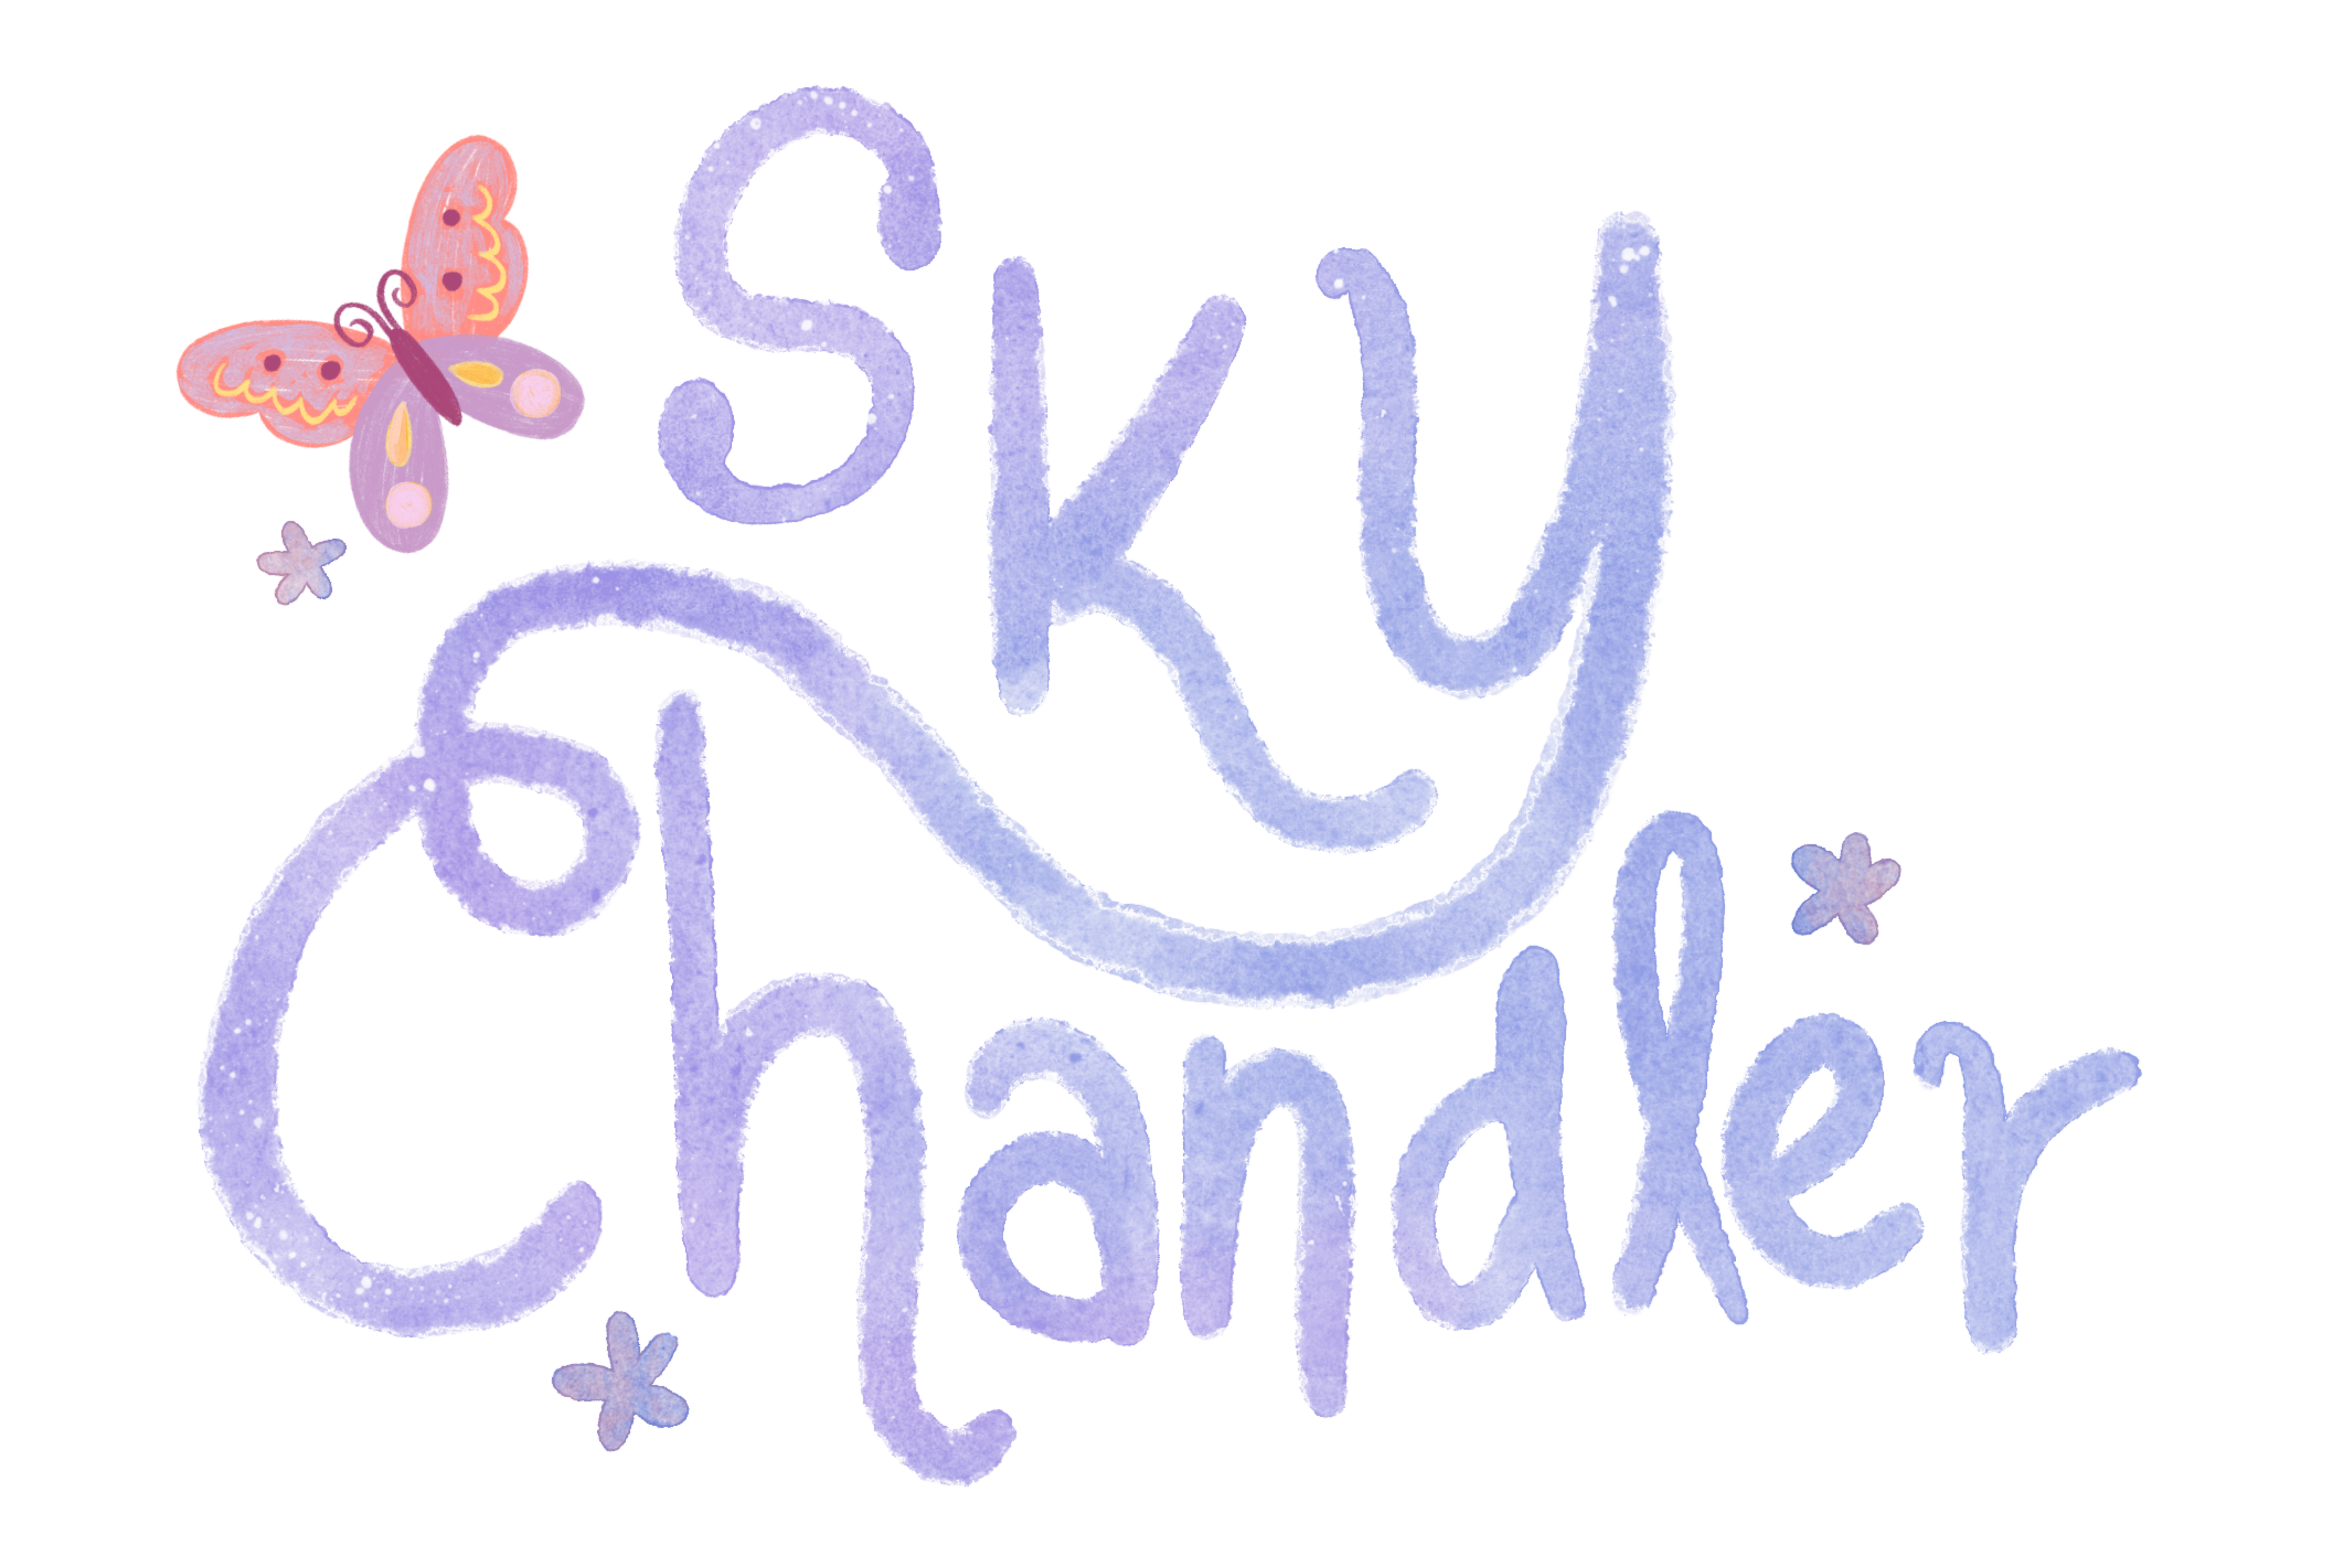 Sky Chandler